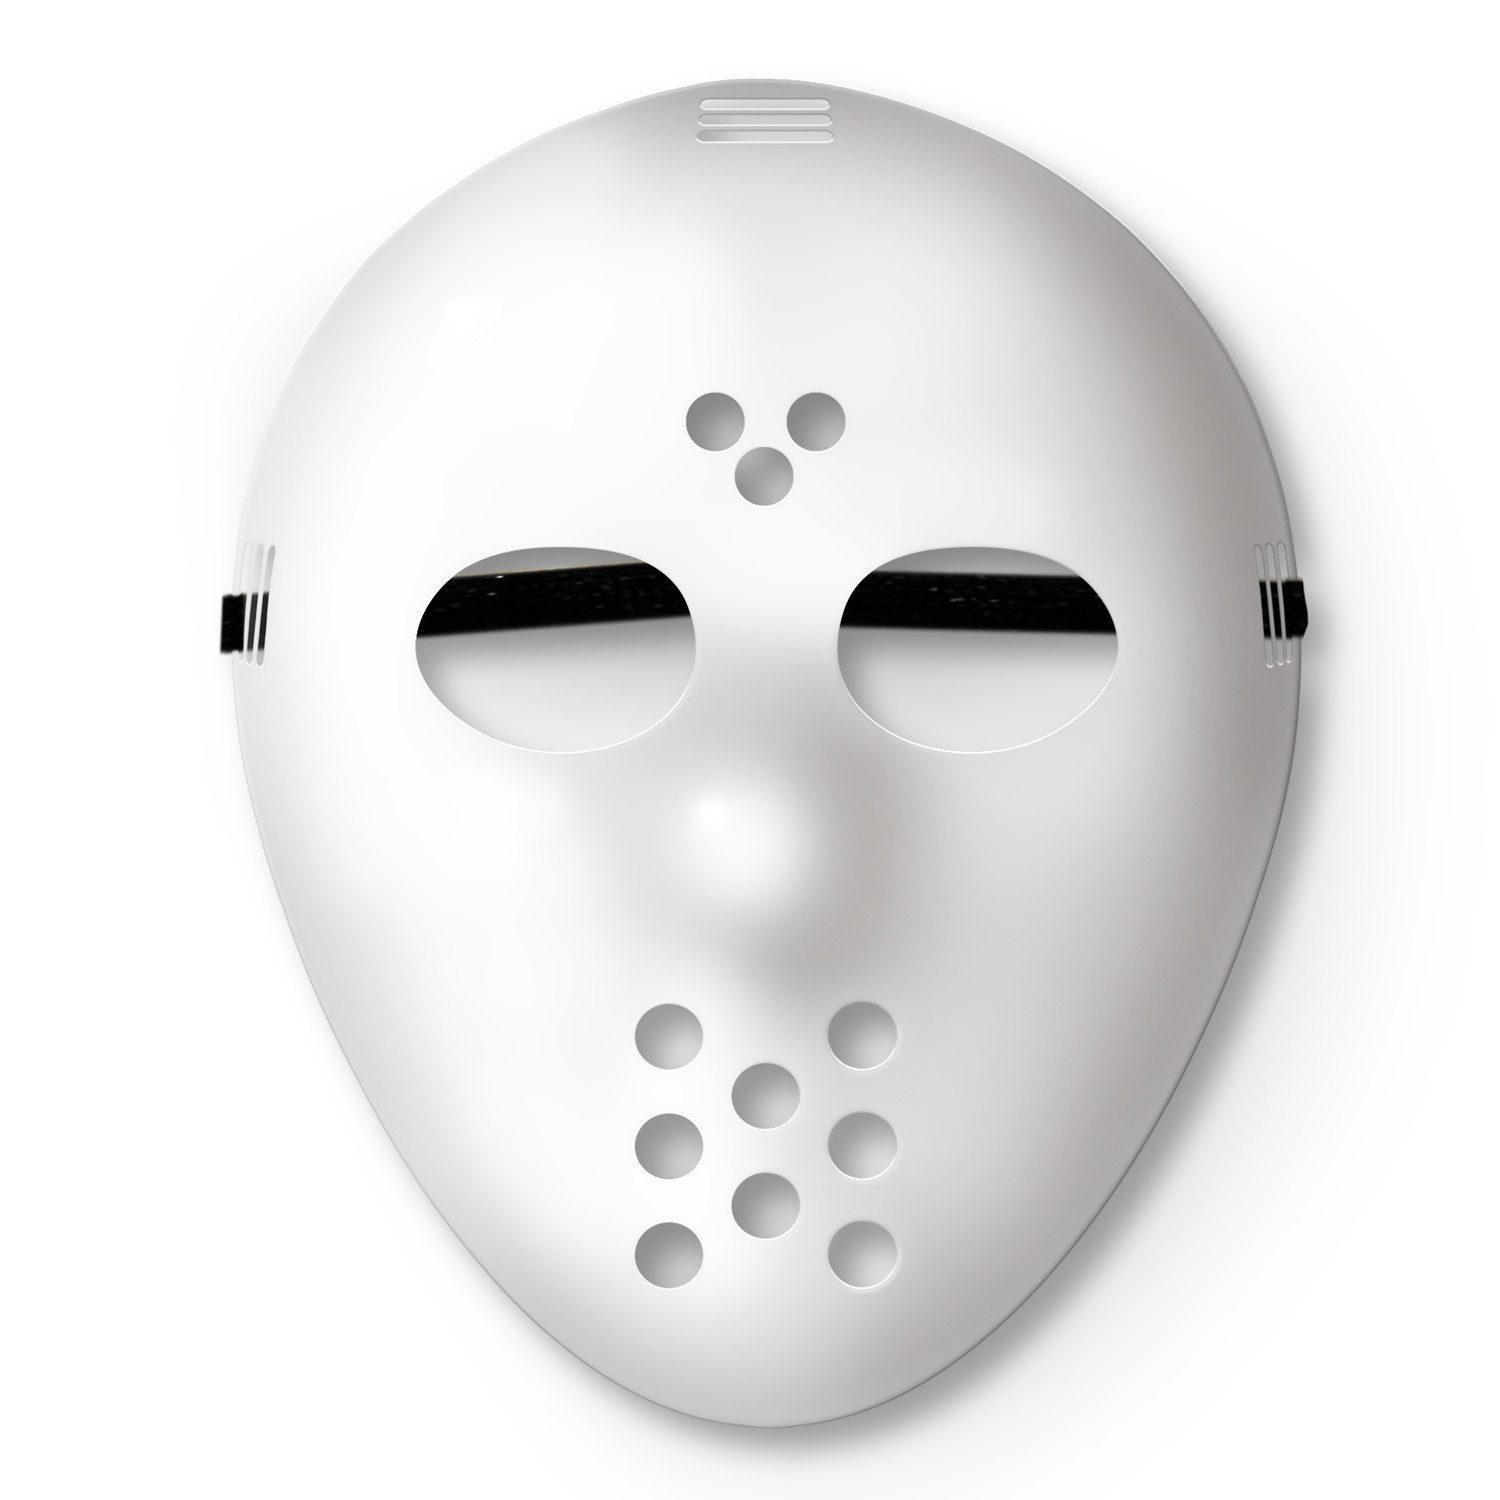 Goods+Gadgets Verkleidungsmaske Jason Hockey Maske, Horror Halloween Gesichtsmaske